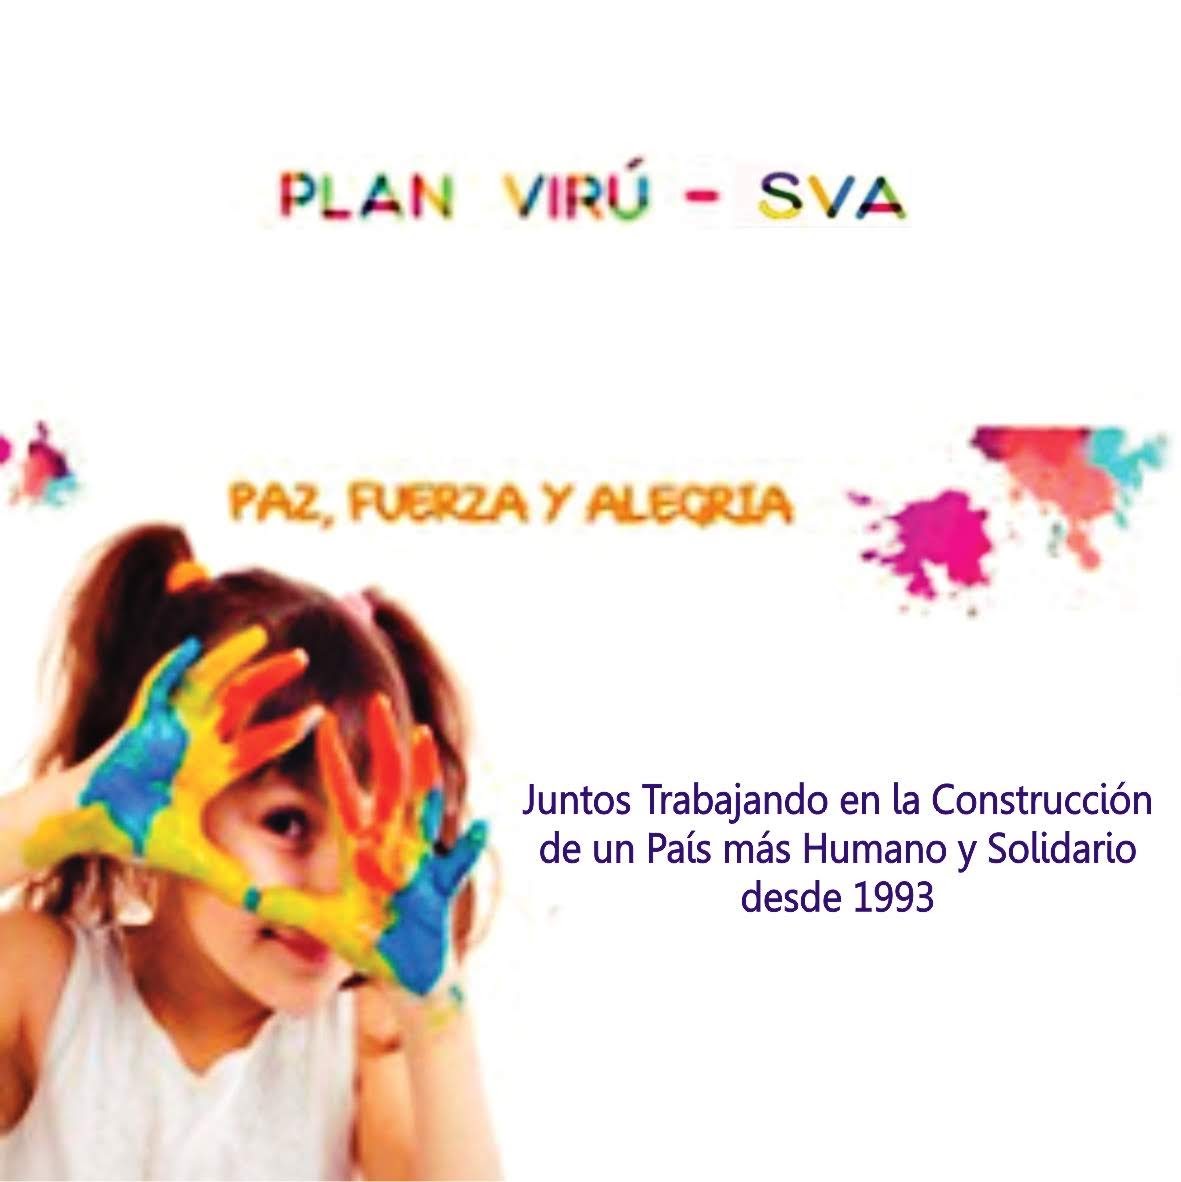 Plan Virú - SVA Proyecto Emblematico